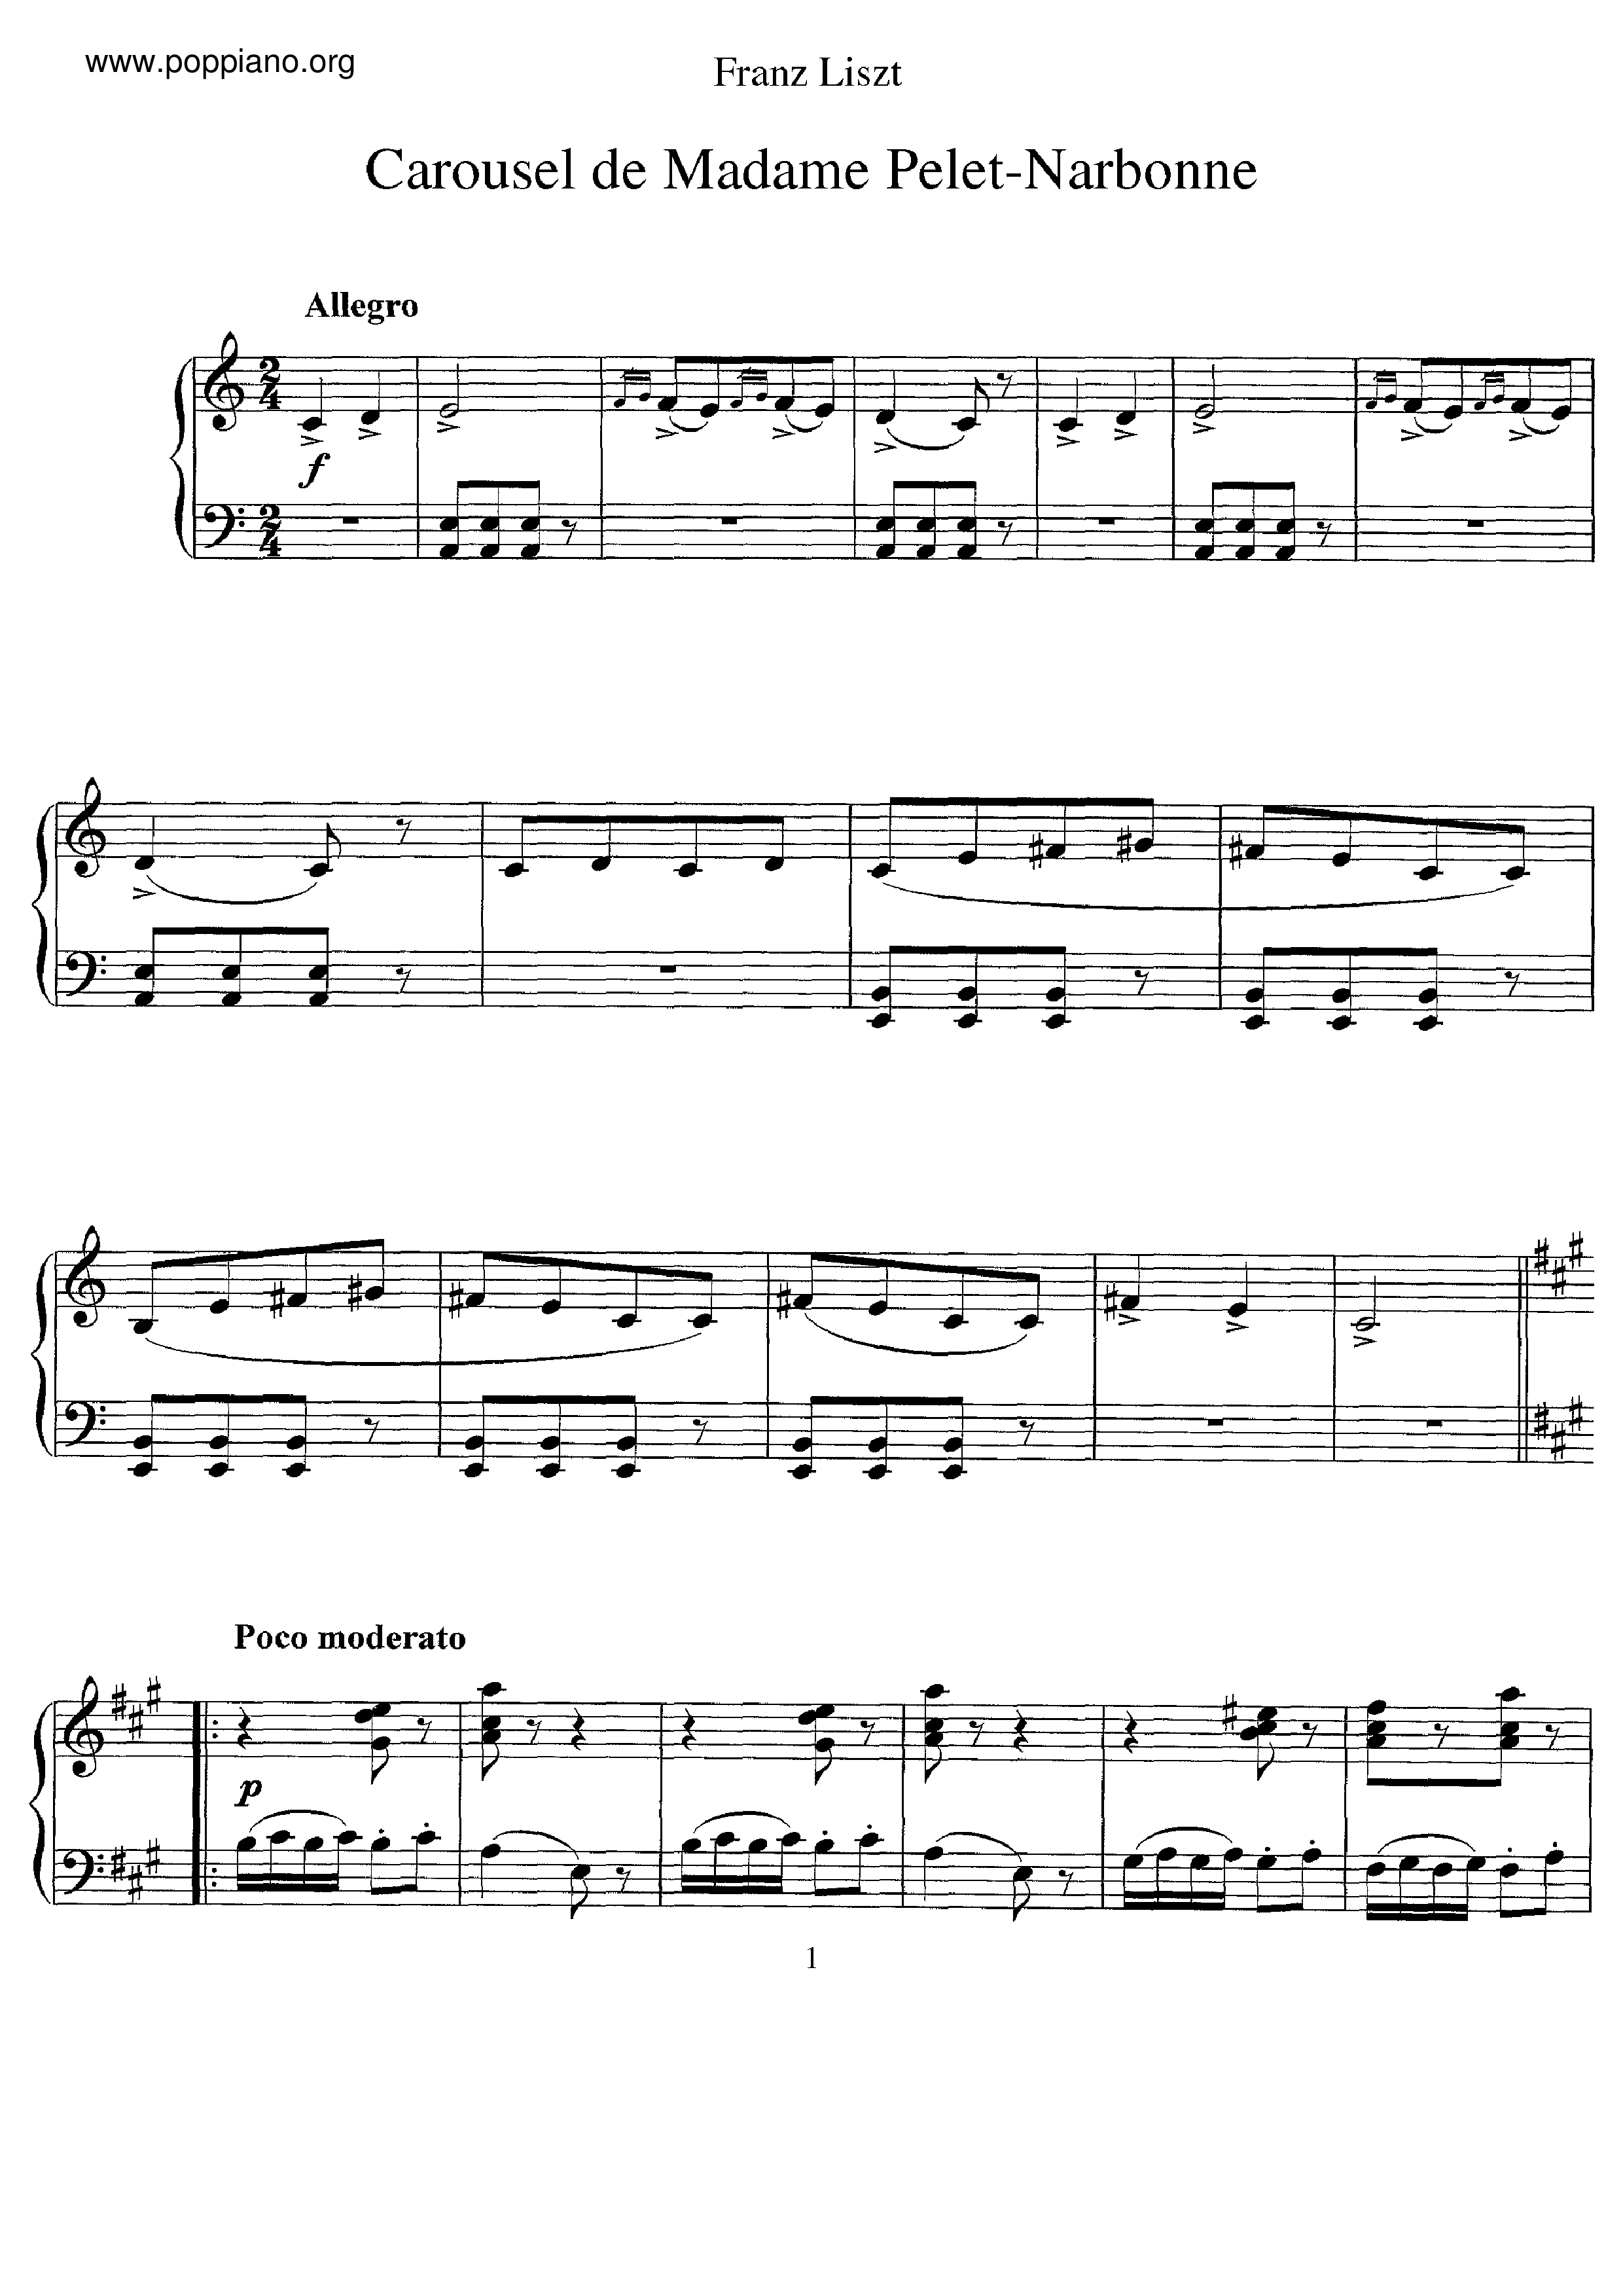 Carousel de Madame Pelet-Narbone, S.214a琴譜